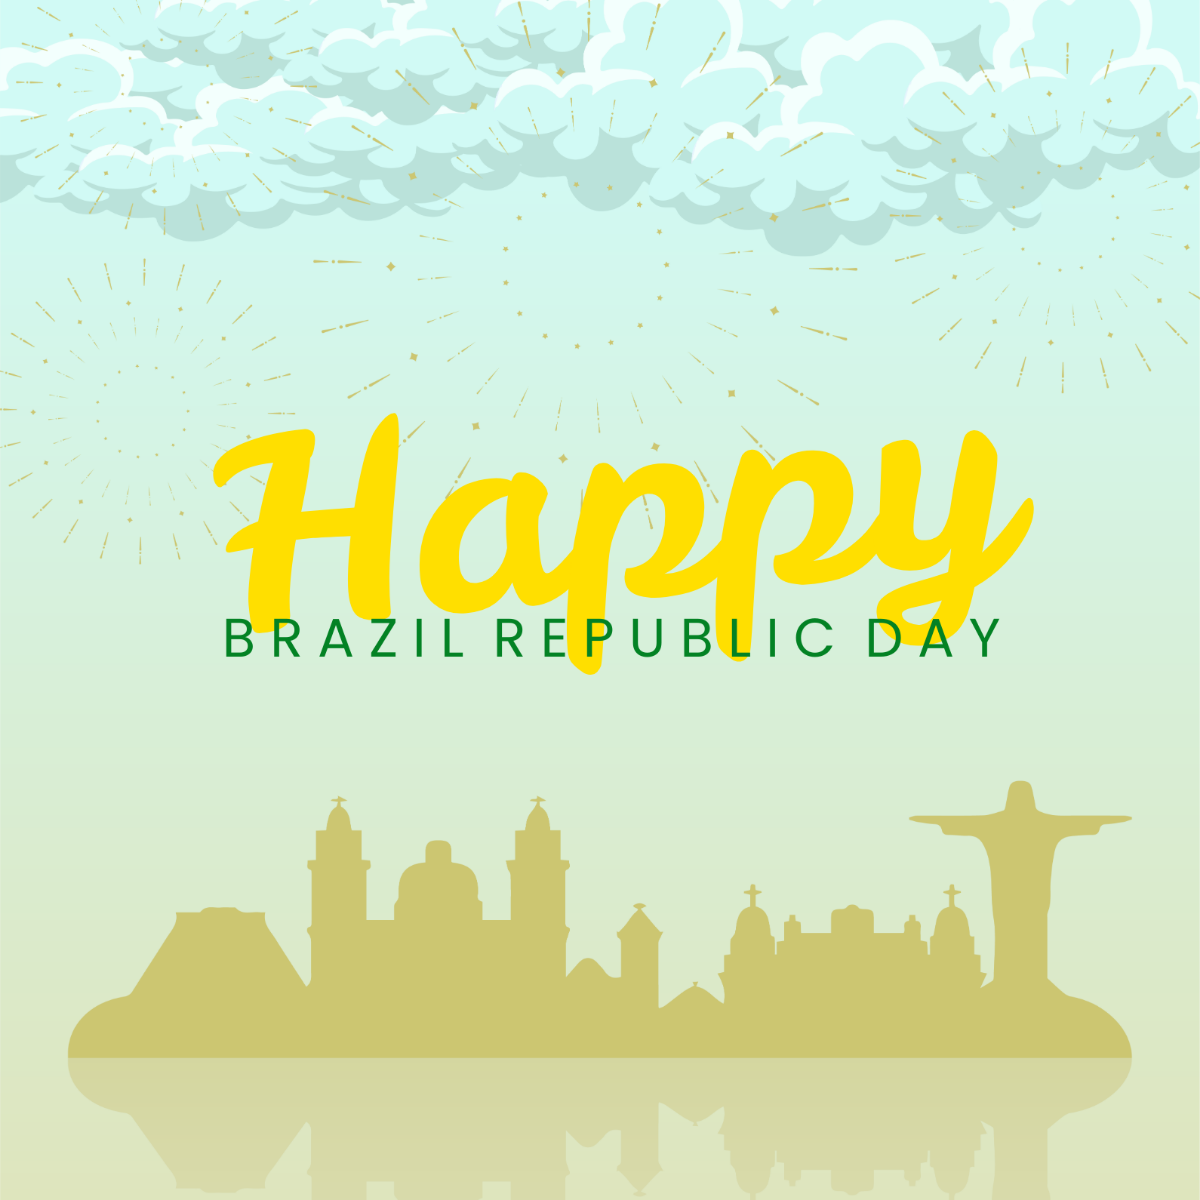 Brazil Republic Day LinkedIn Post